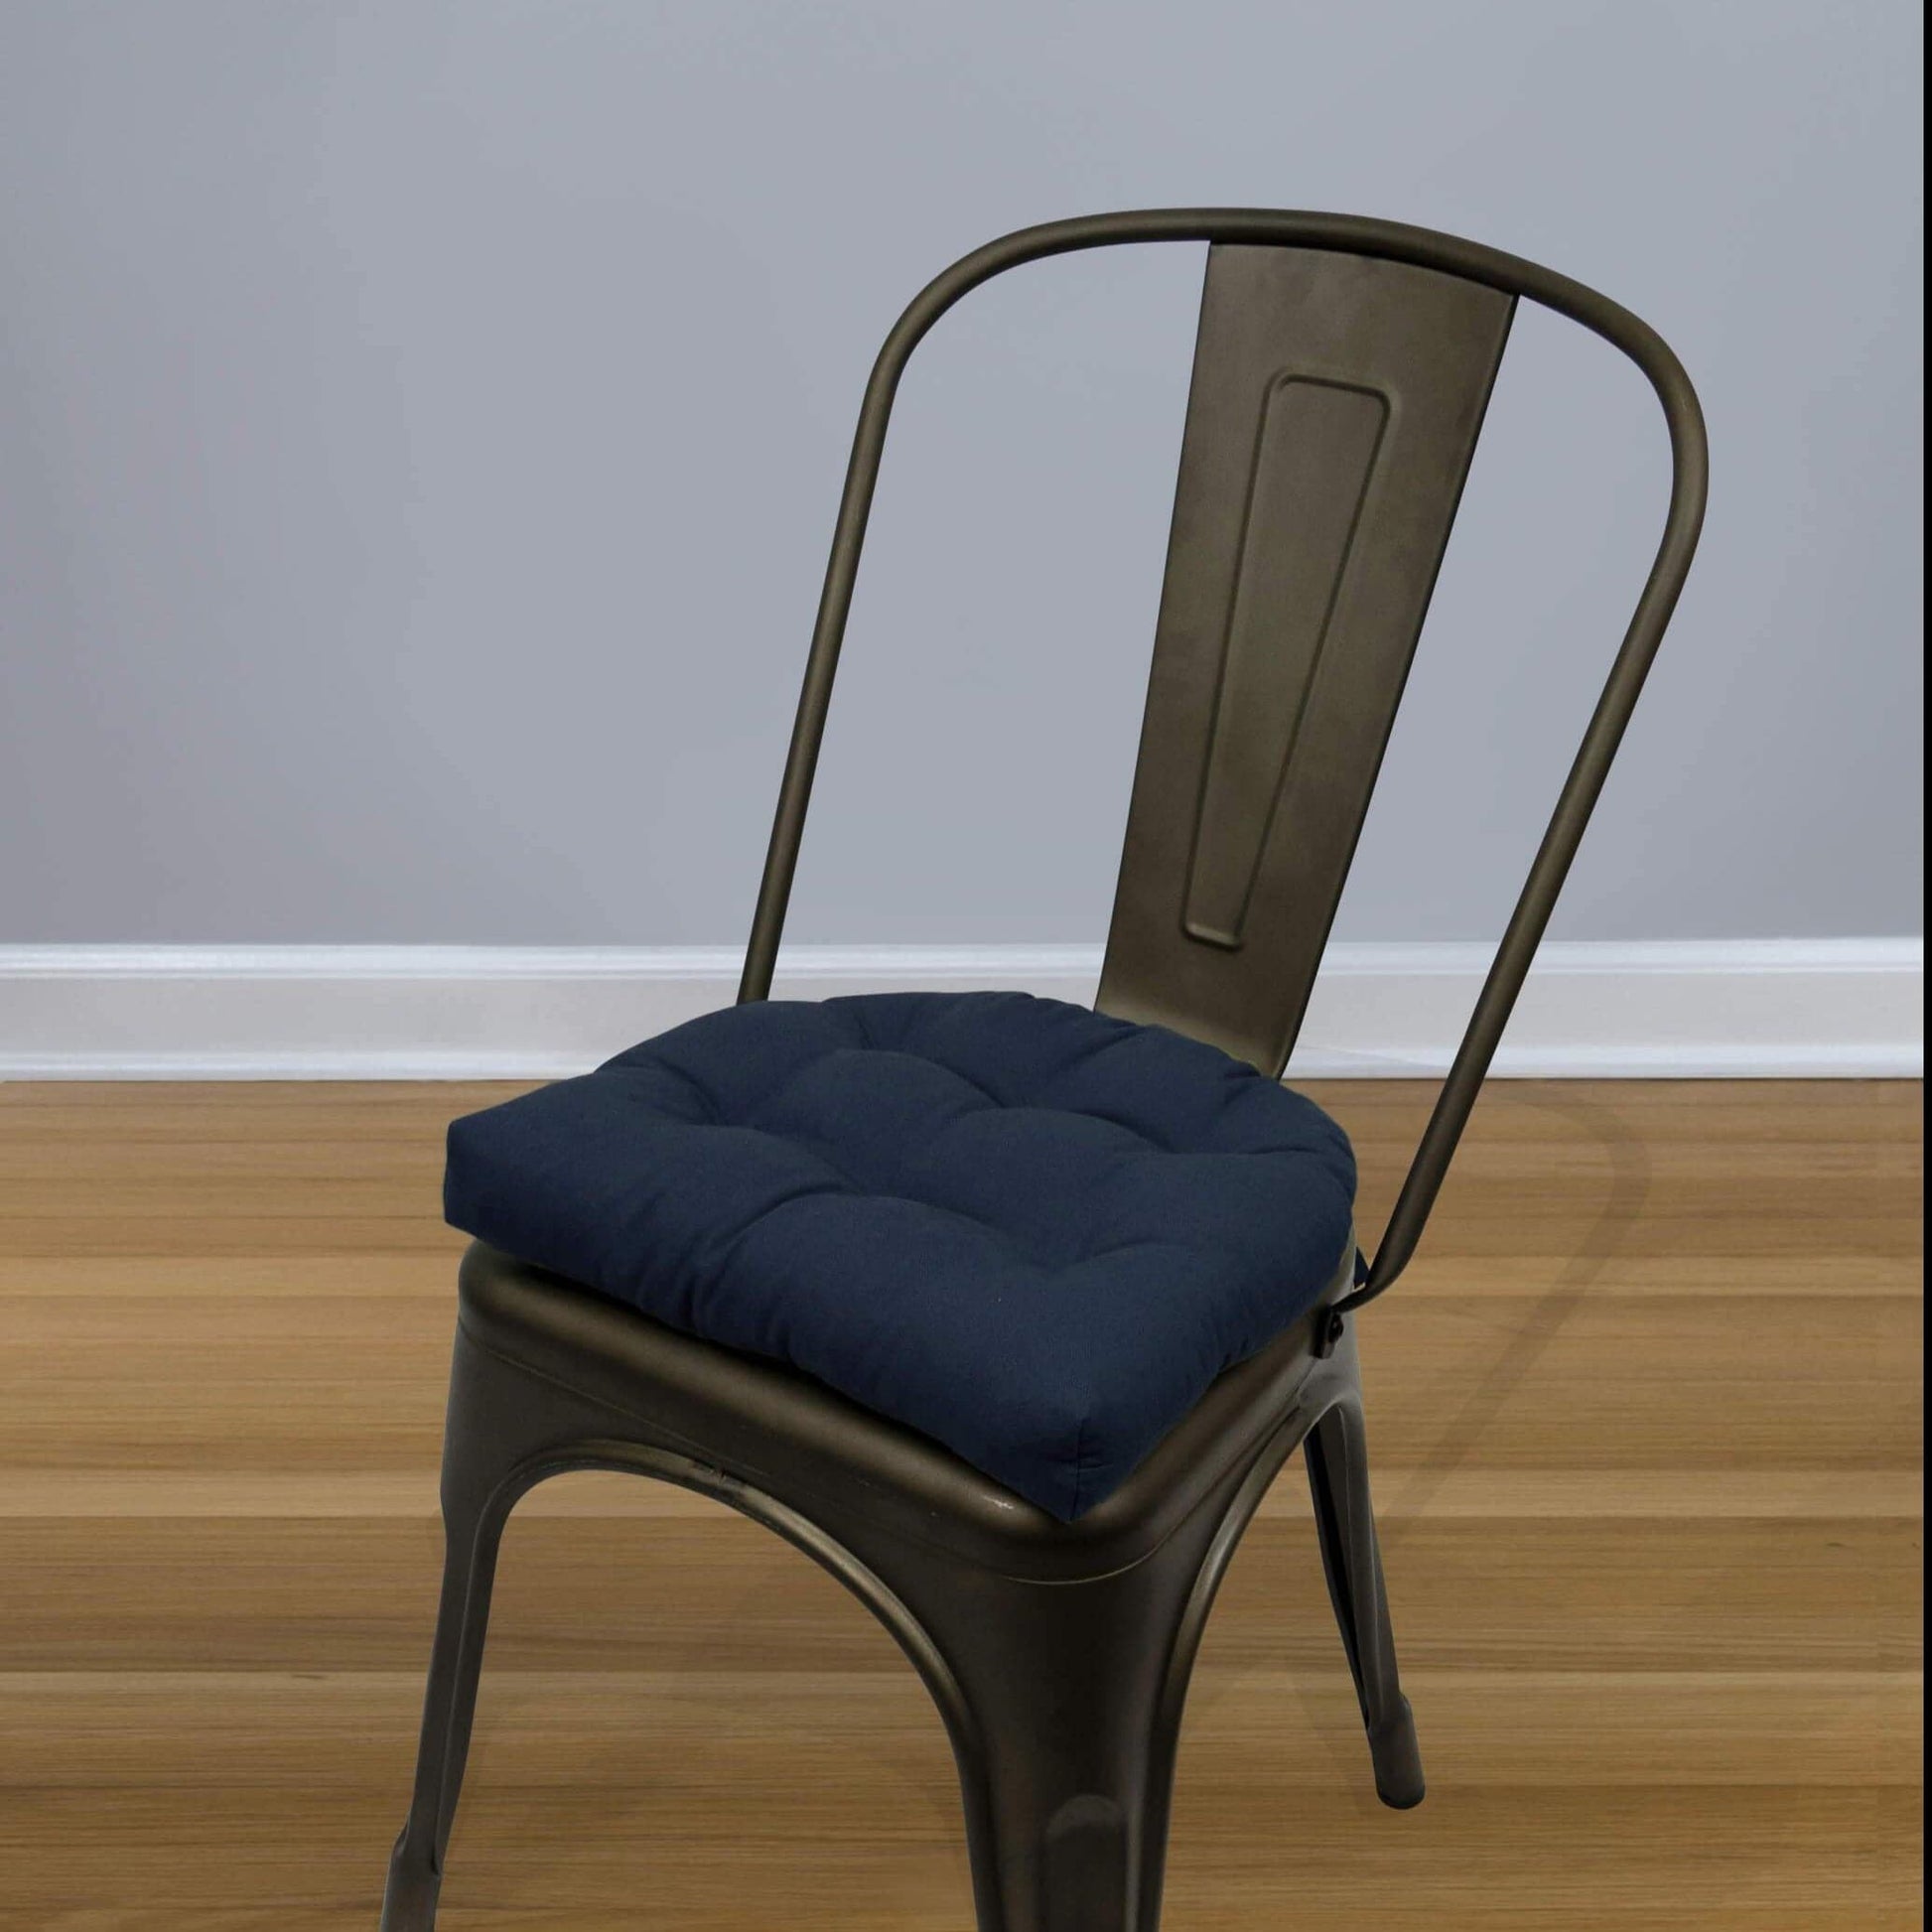 Cotton Duck Navy Blue Industrial Chair Cushion - Latex Foam Fill - Barnett Home Decor 